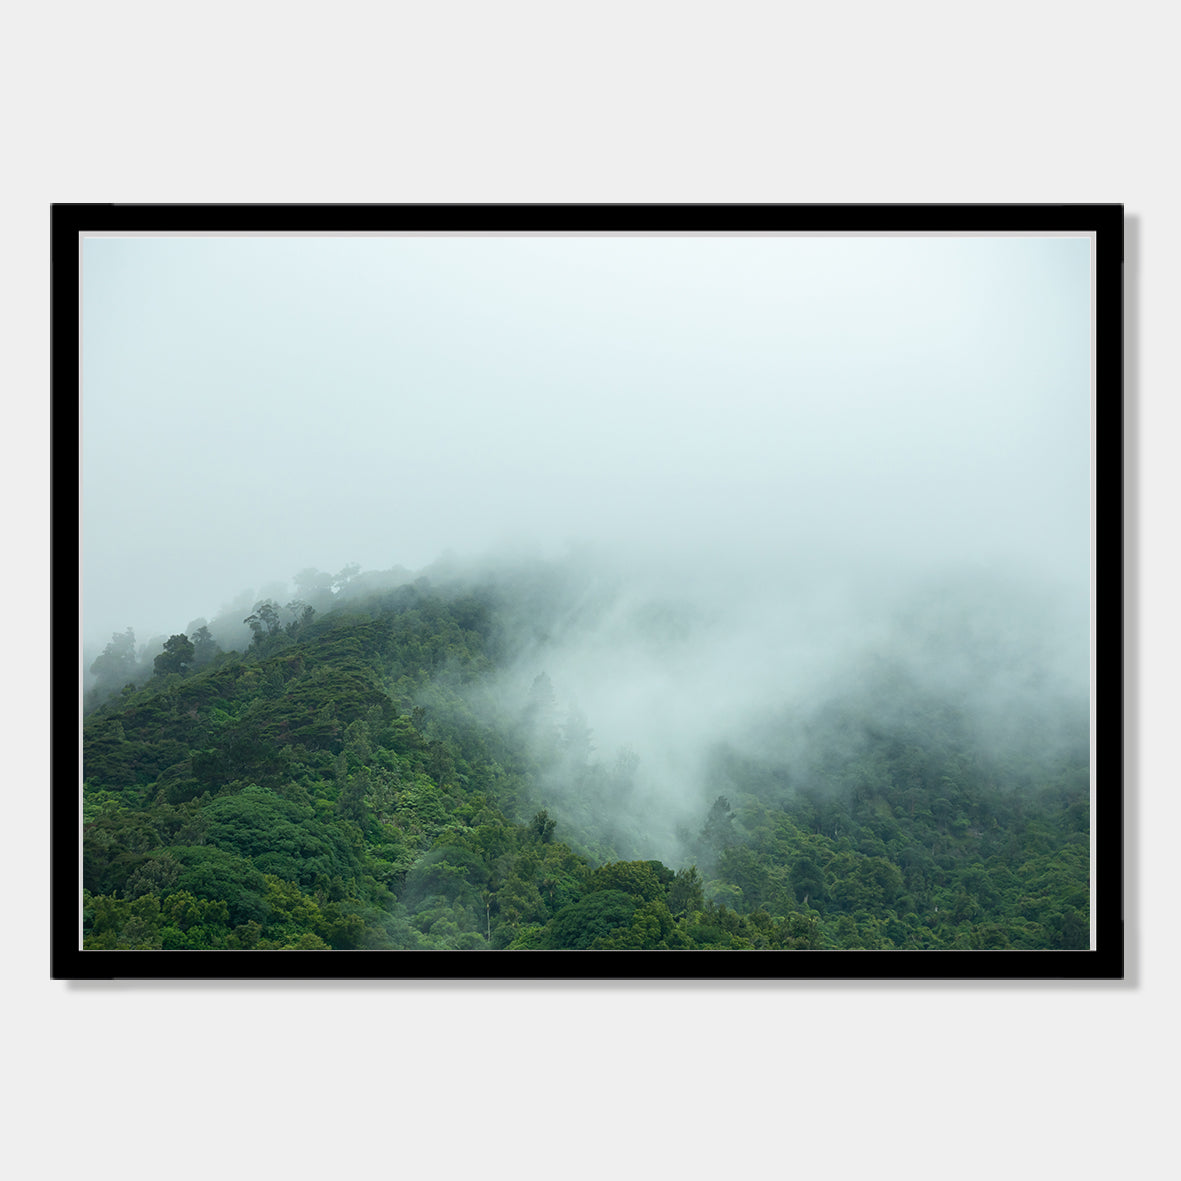 Photographic Art Print of hill side shrouded in mist, Te Aroha, New Zealand by Chris Starkey. Printed in New Zealand by endemicworld and framed in black.